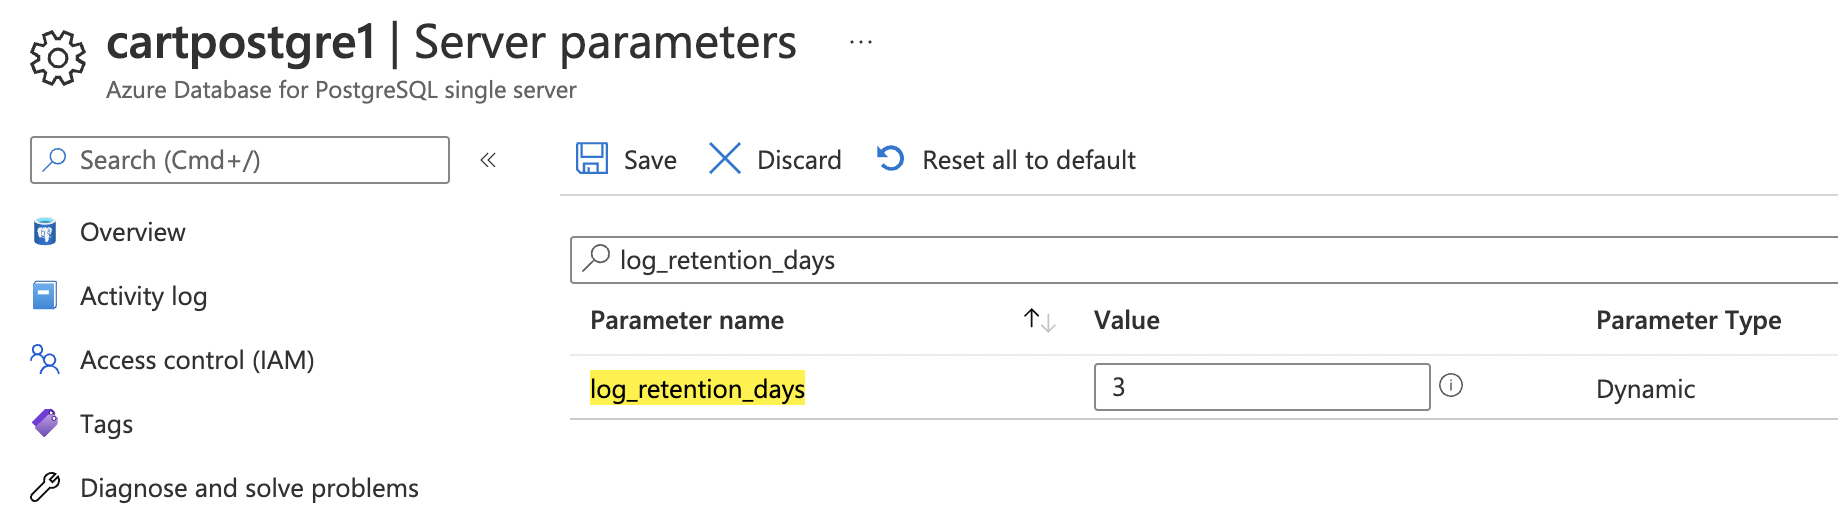 nxfilter 90 day log retention